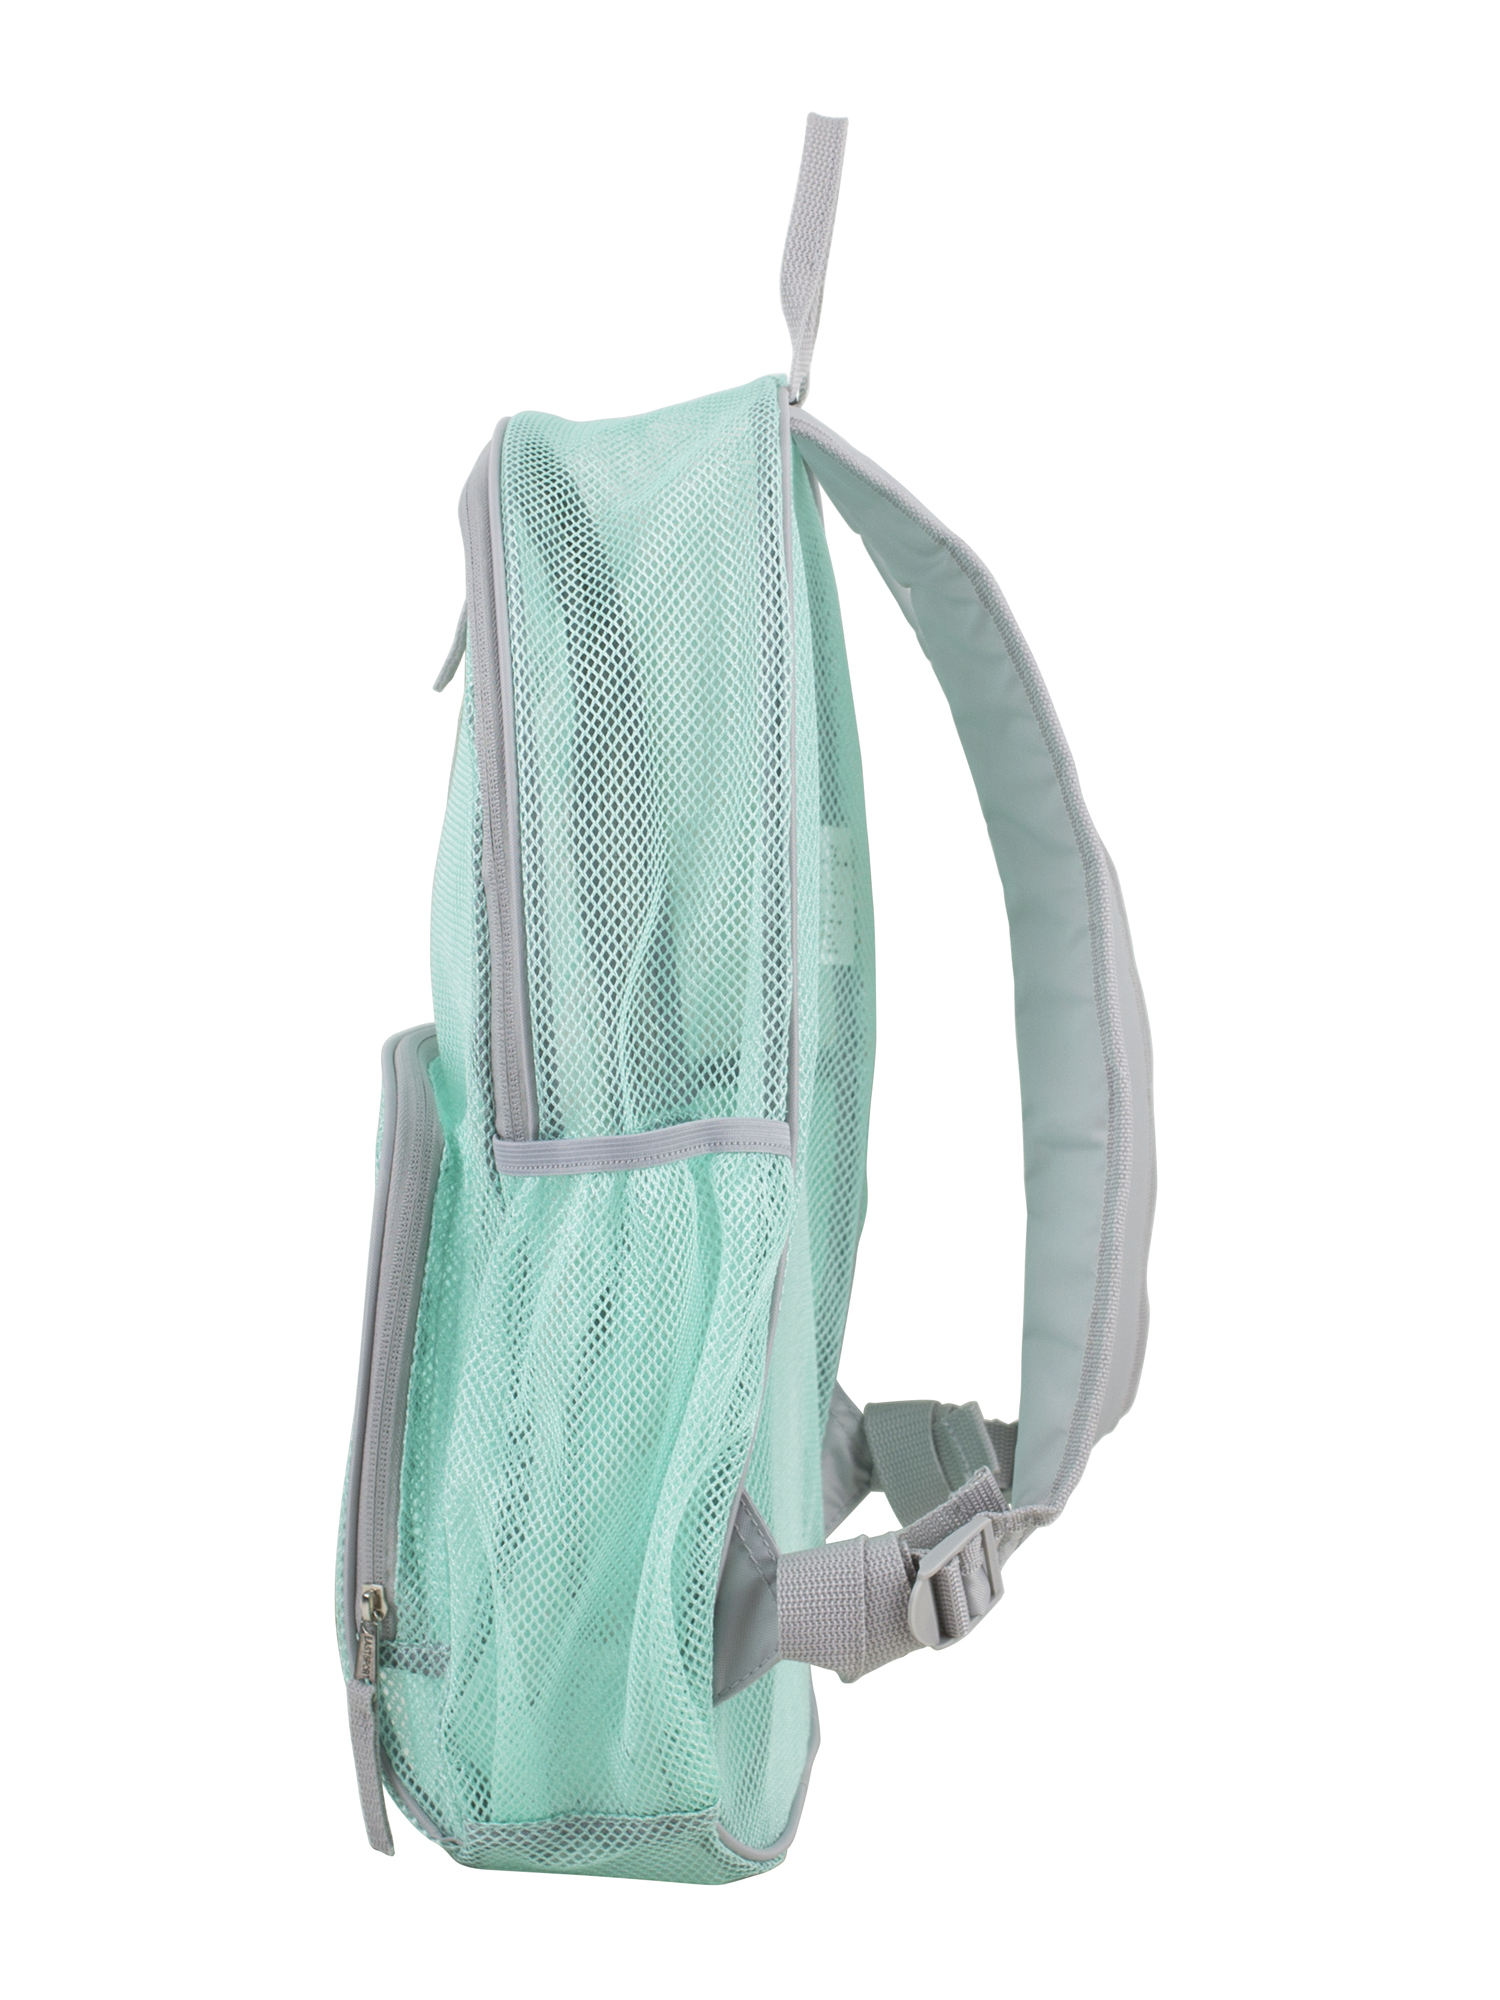 Eastsport Unisex Multi-Purpose Mesh Backpack with Front Pocket Mint - image 3 of 6